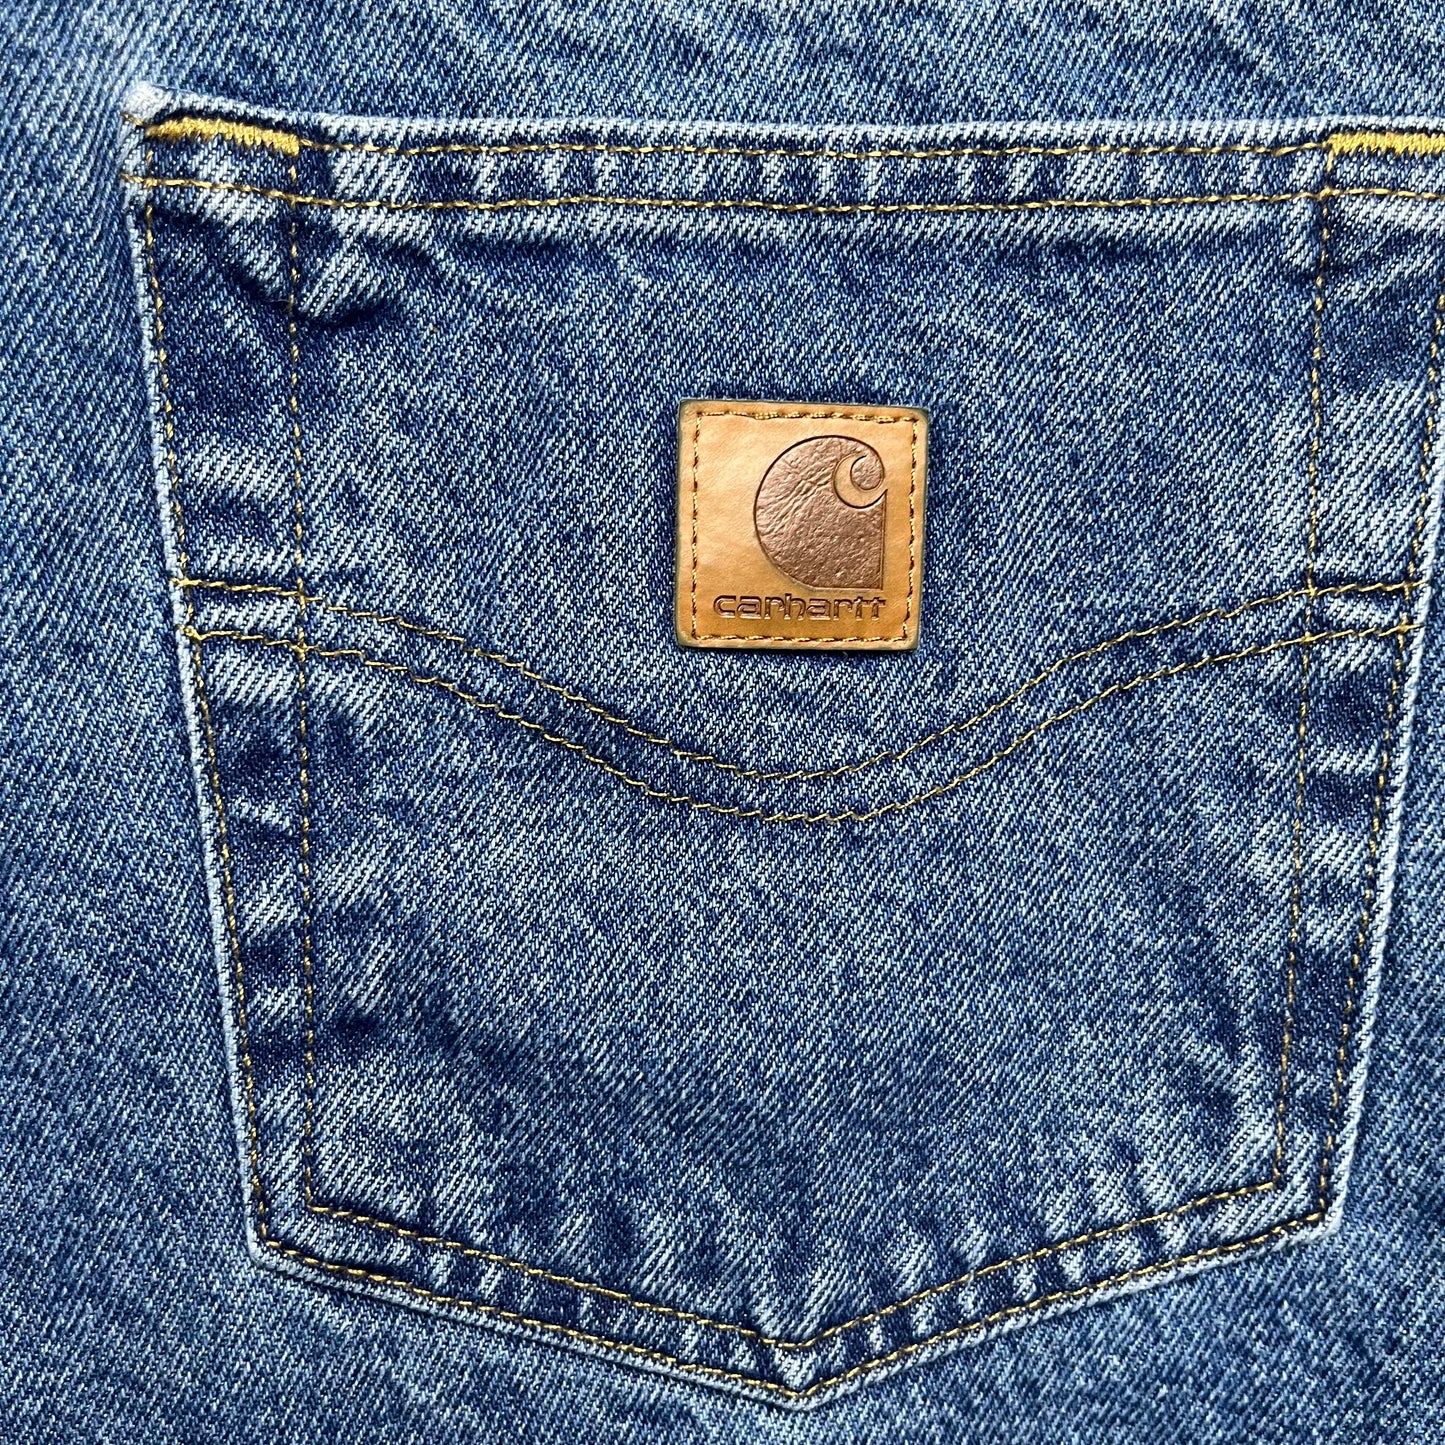 Carhartt Blue Jeans (38x30)